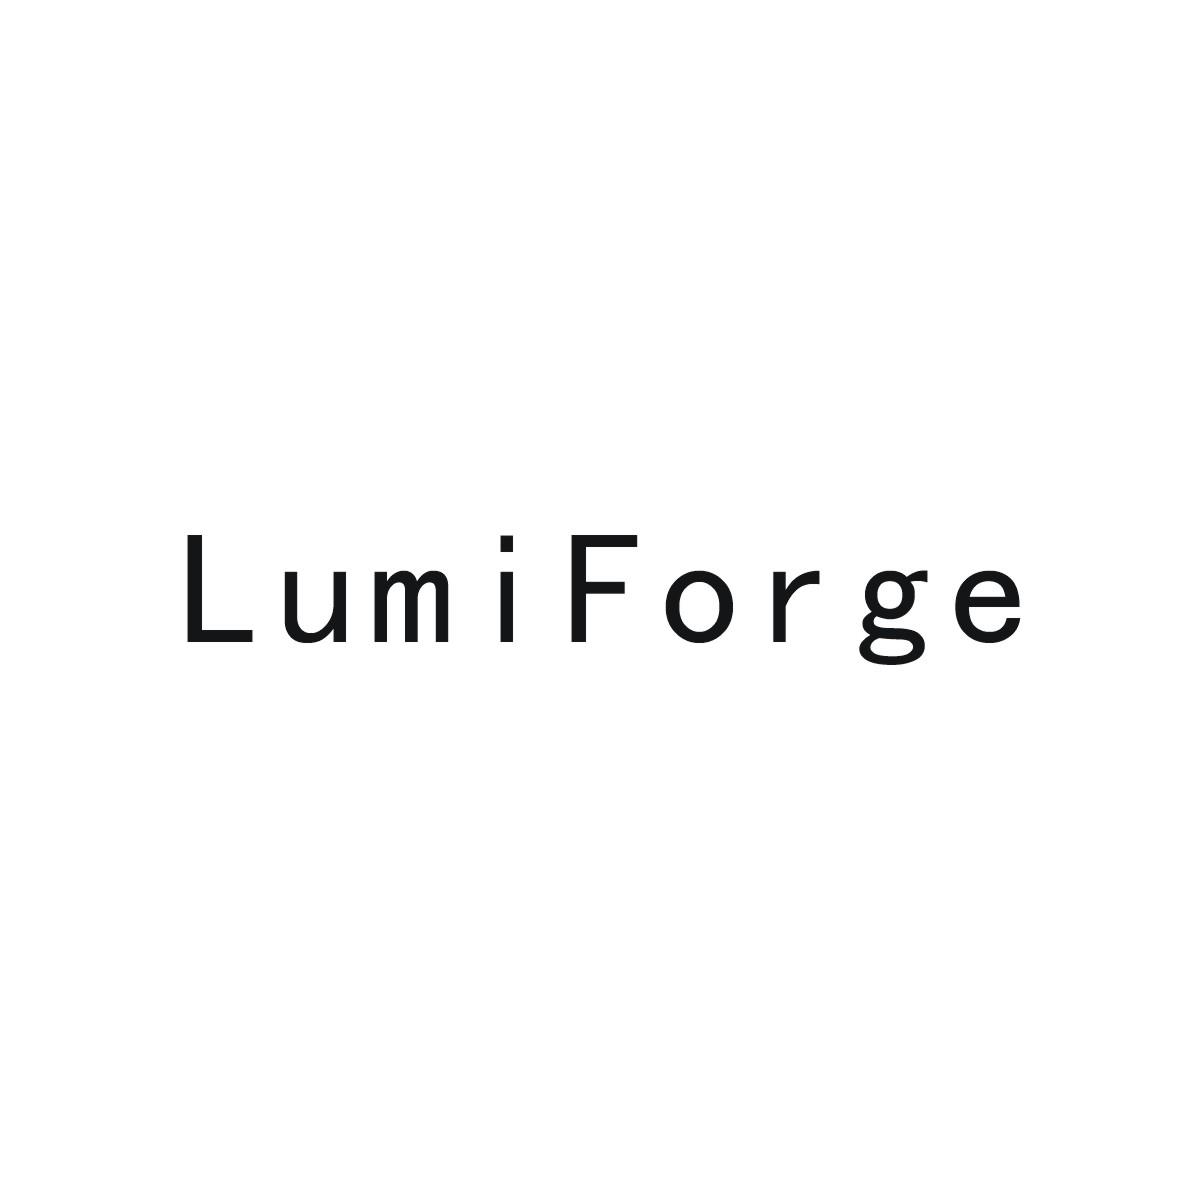 Lumi Forge蚕种商标转让费用买卖交易流程